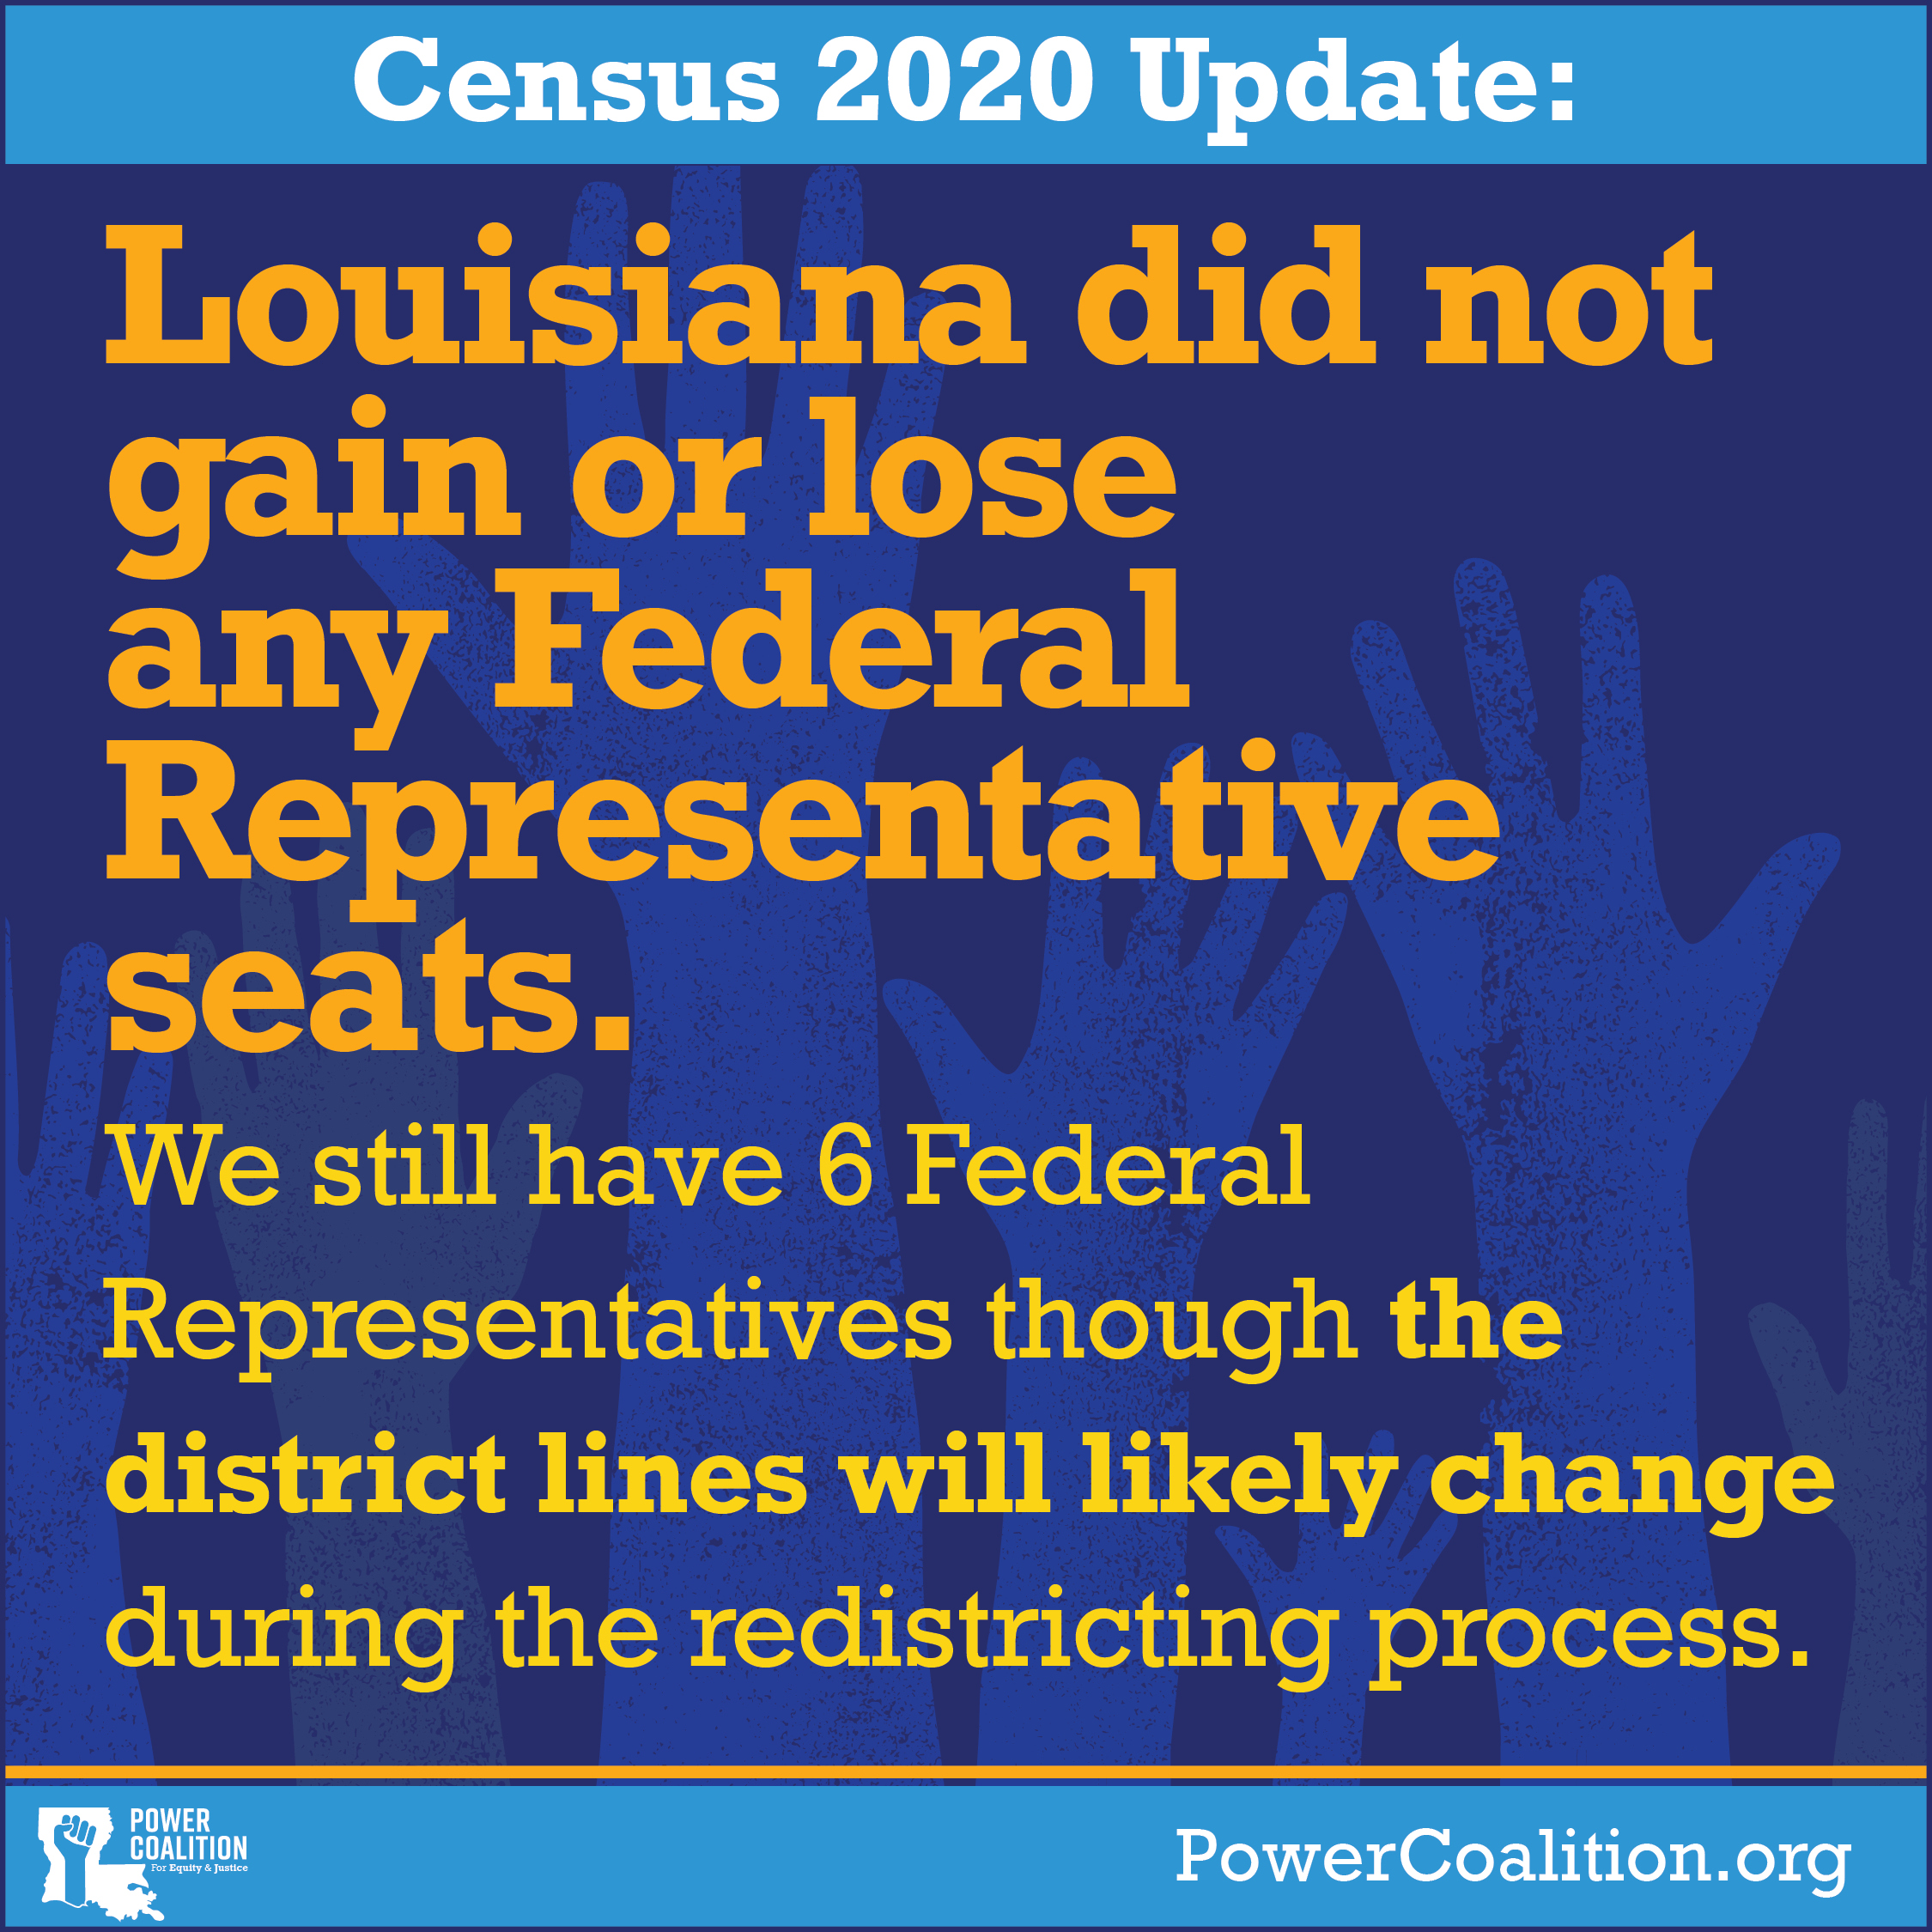 Louisiana did not gain or lose any federal representative seats.